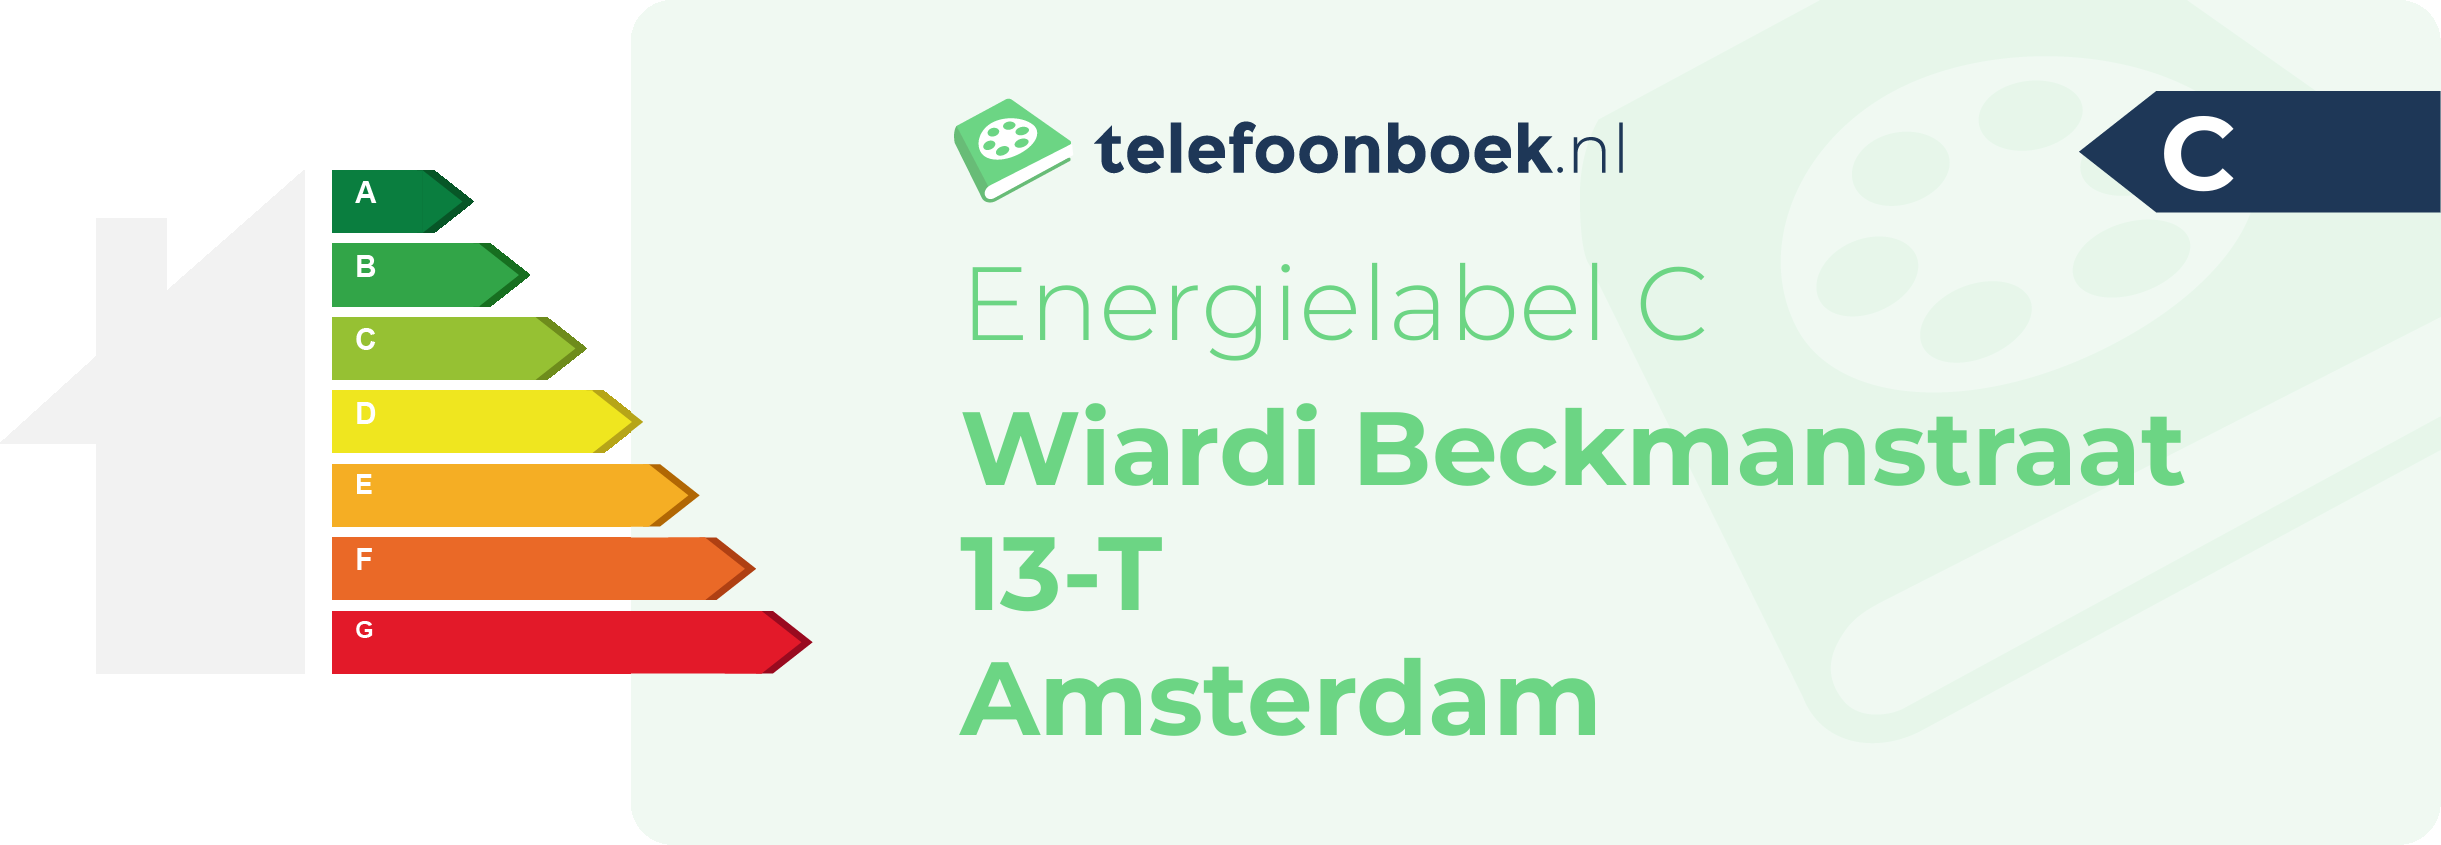 Energielabel Wiardi Beckmanstraat 13-T Amsterdam